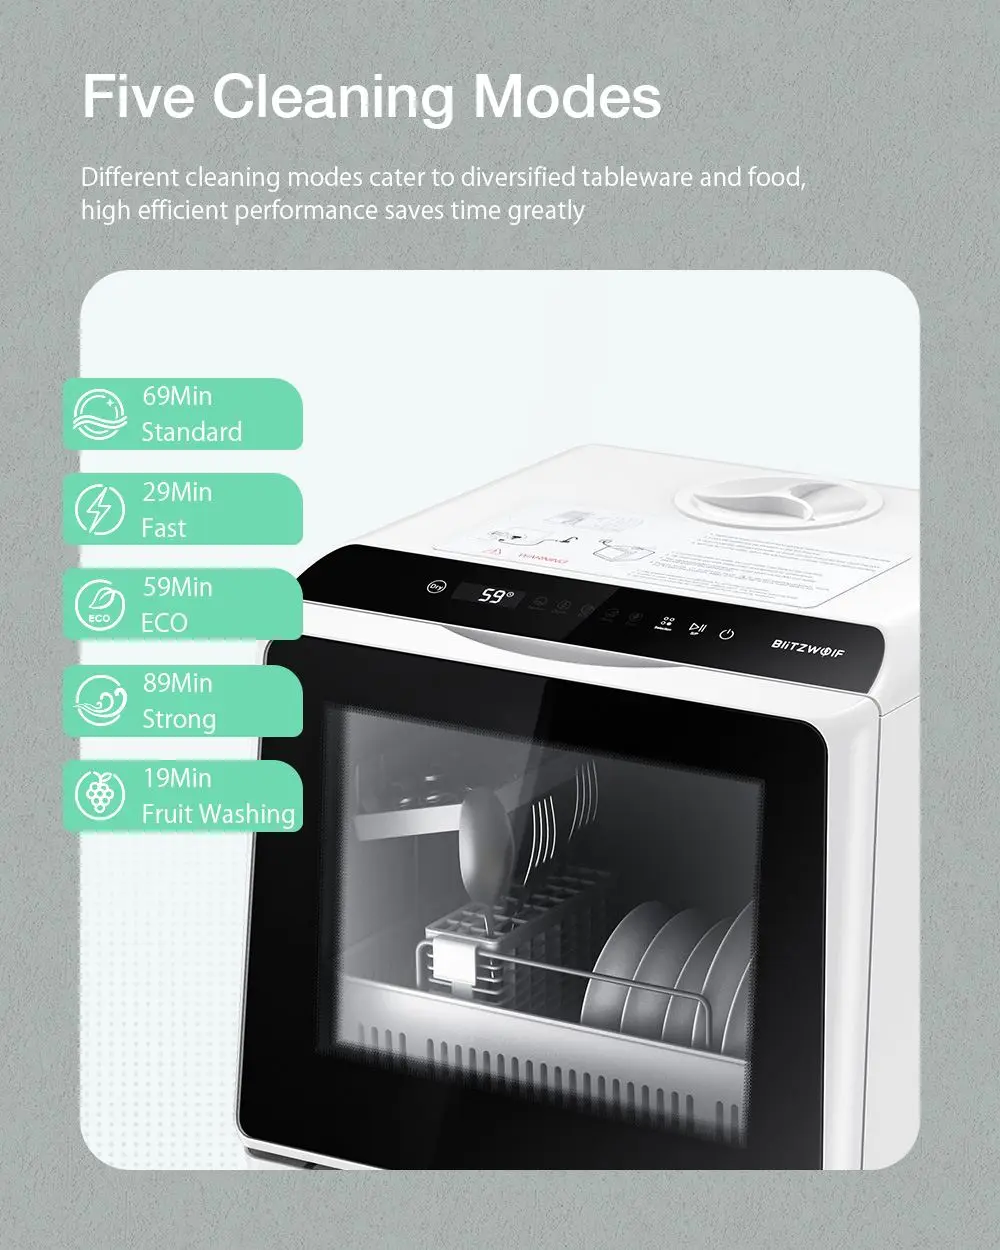 Blitzhome-lavavajillas con Control por aplicación, Máquina